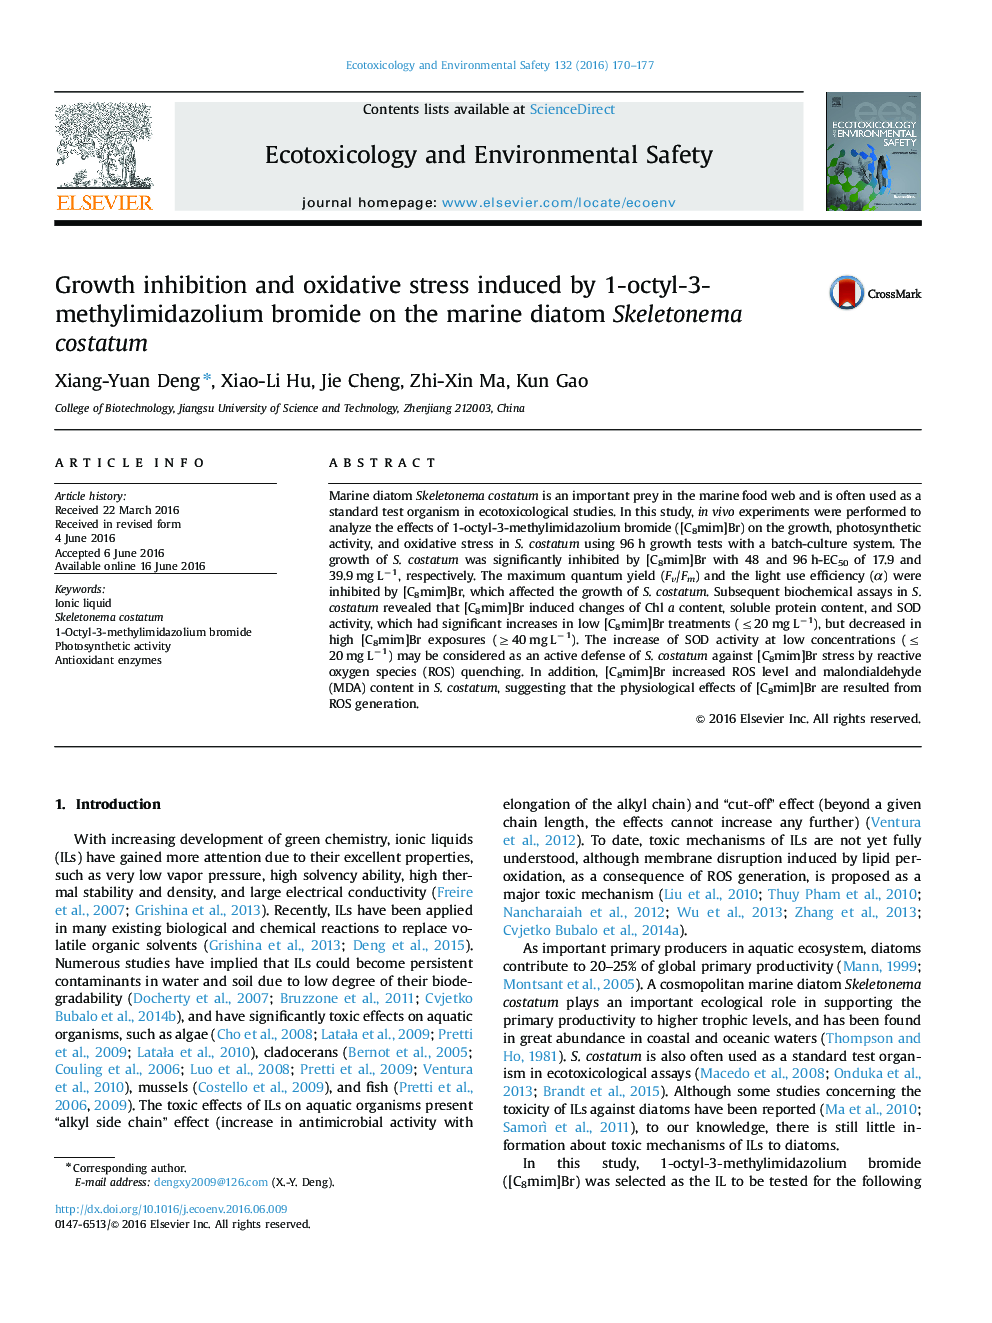 Growth inhibition and oxidative stress induced by 1-octyl-3-methylimidazolium bromide on the marine diatom Skeletonema costatum